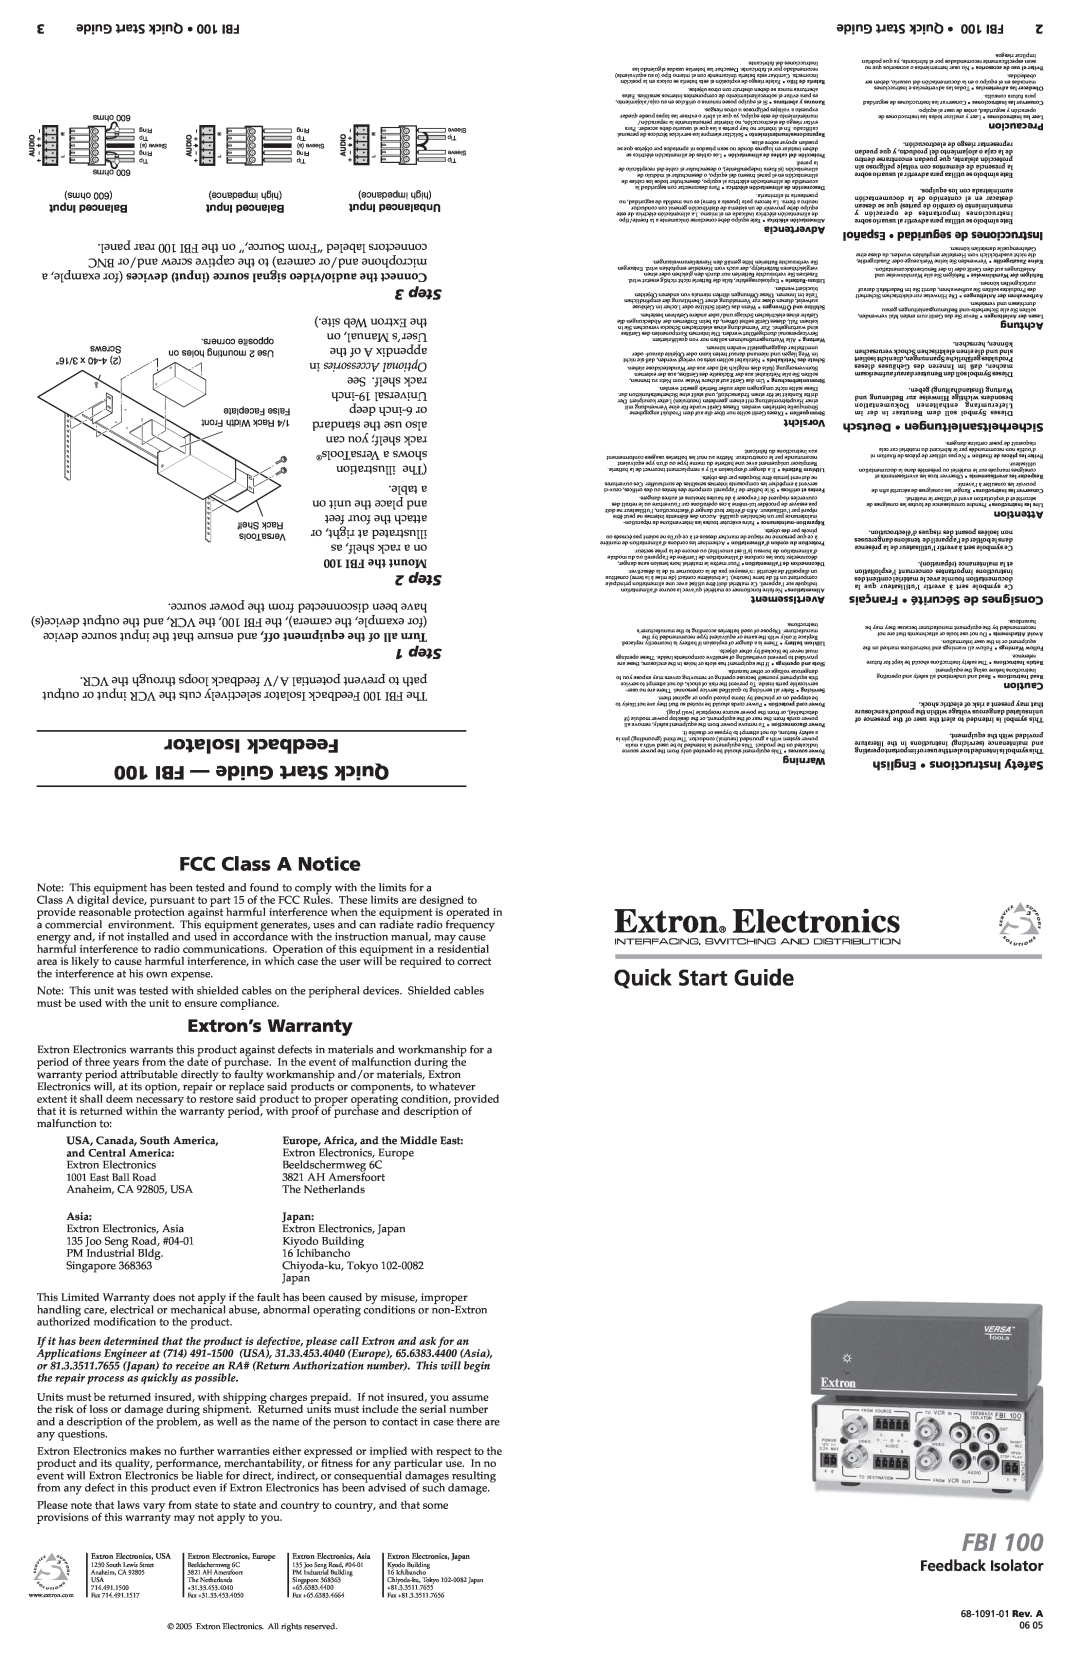 Extron electronic FBI 100 specifications Features, Description, Specifications, Model 